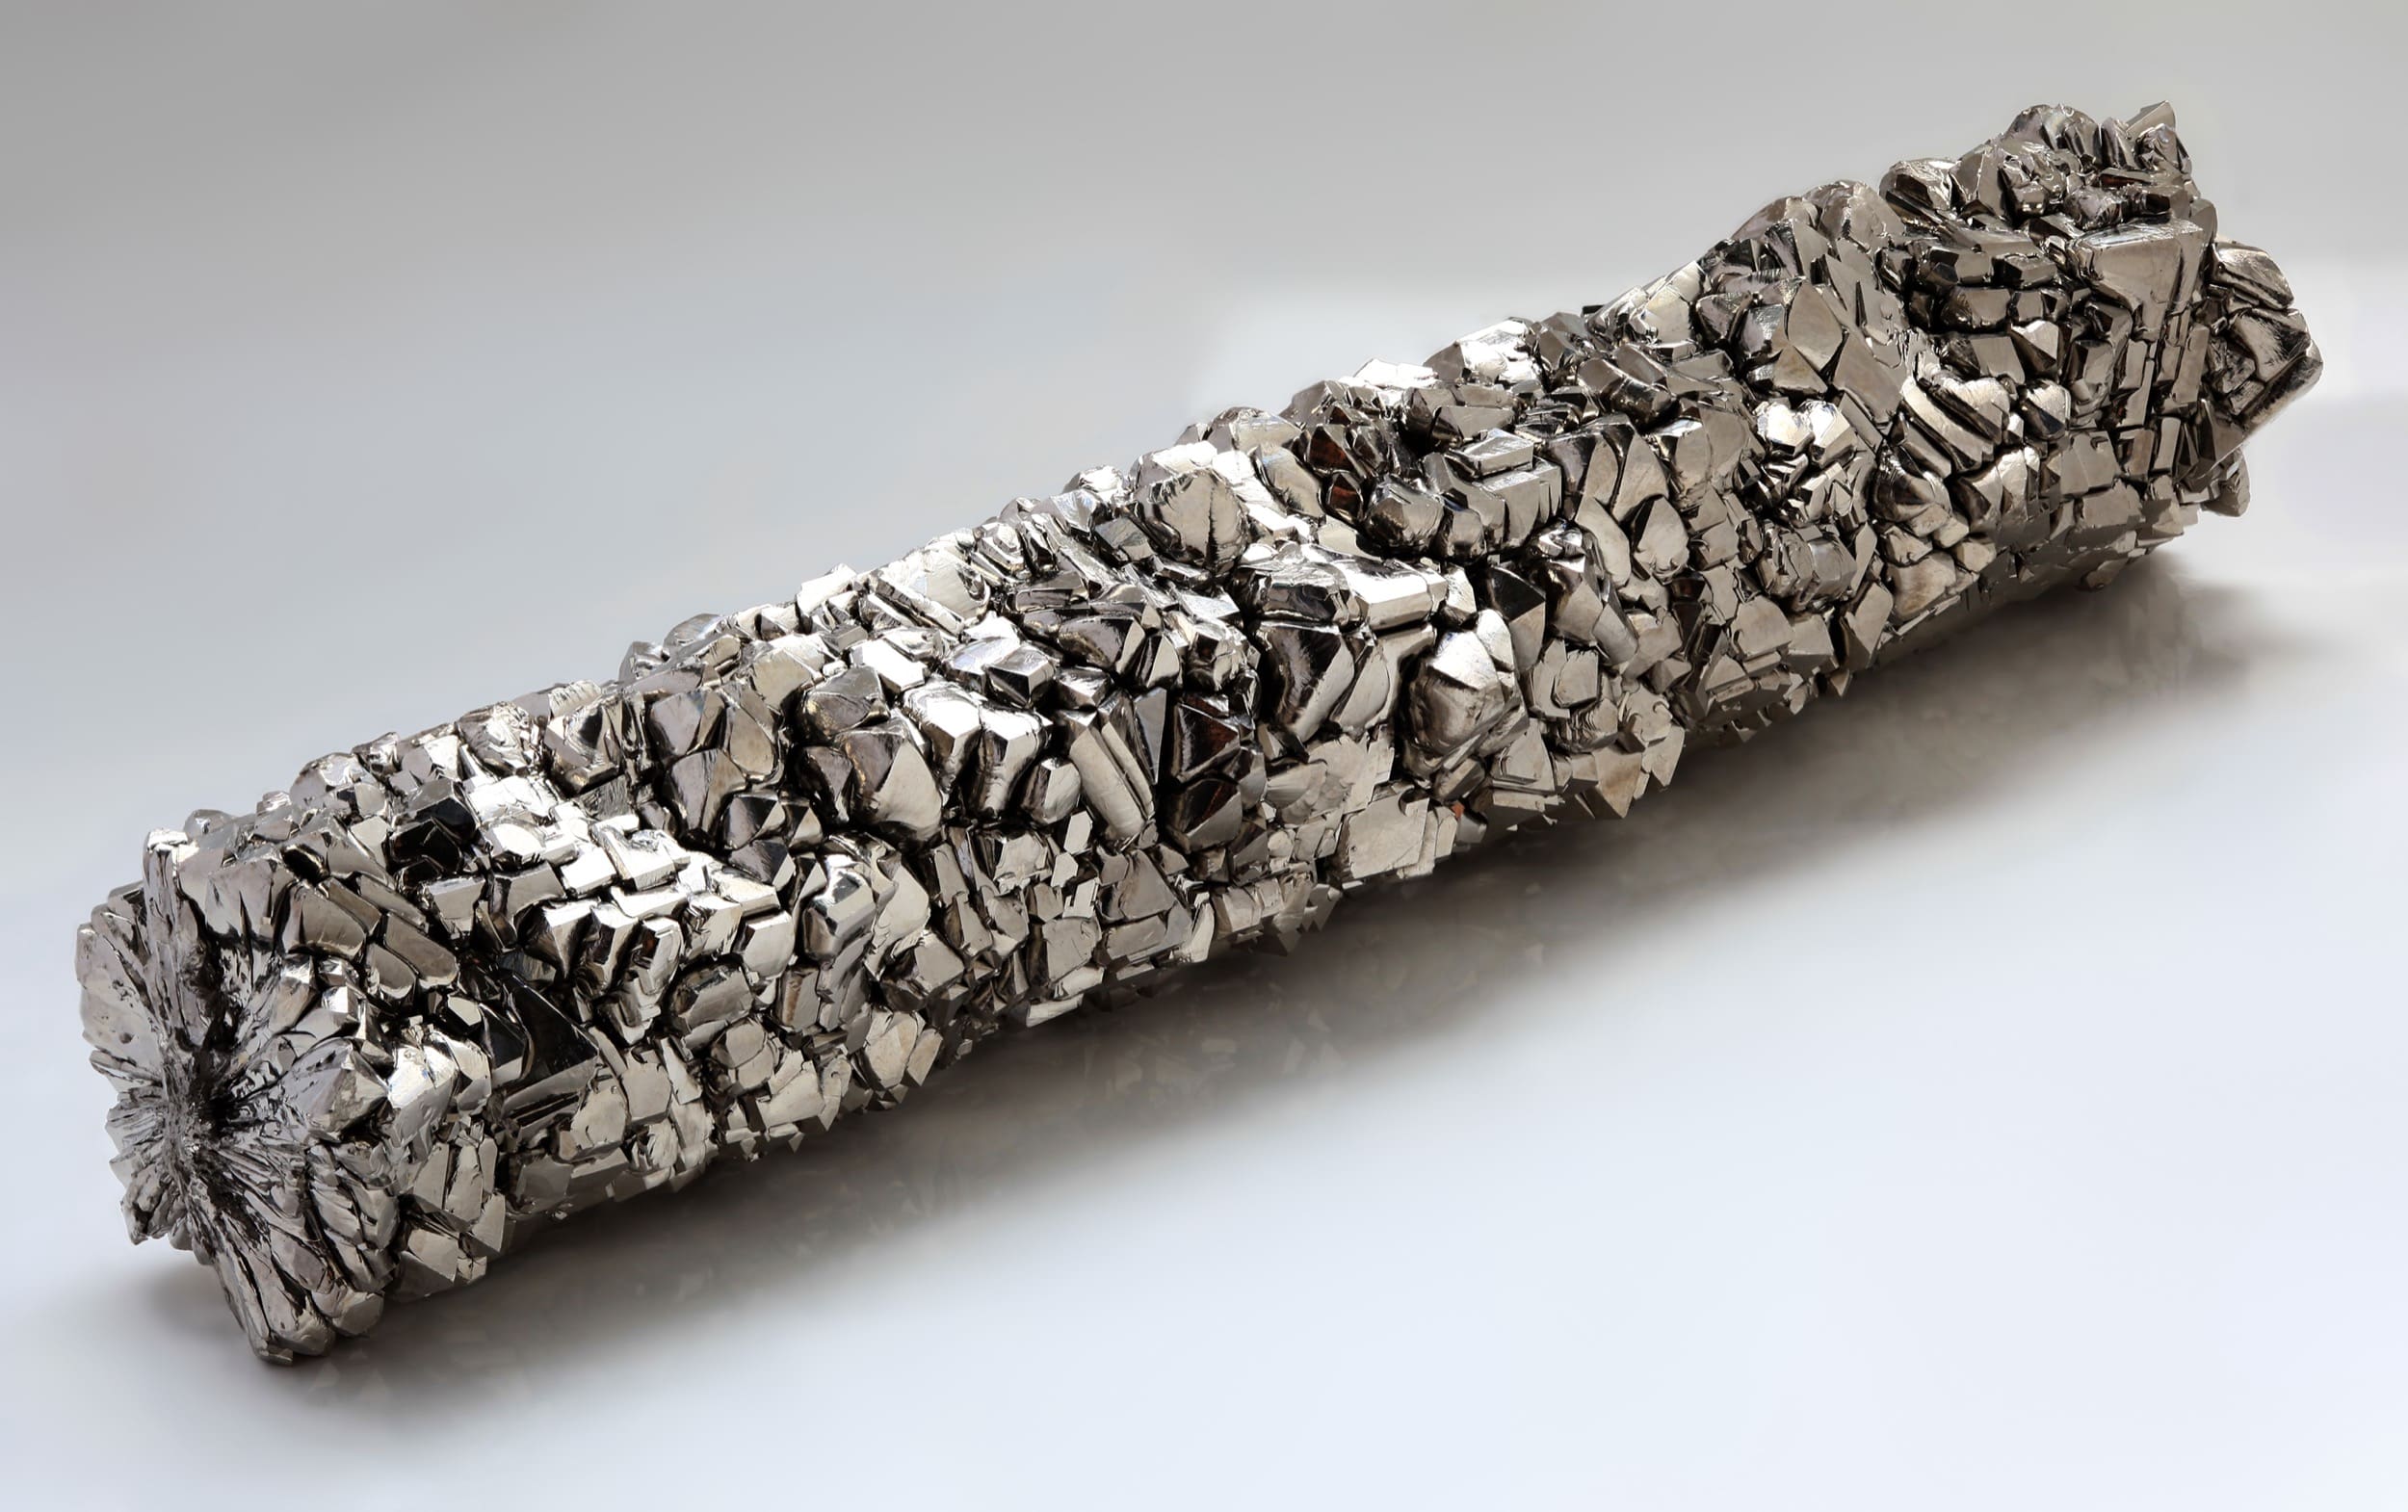 A ~5.5" long, 99.995% pure titanium crystal bar made via the iodide process.